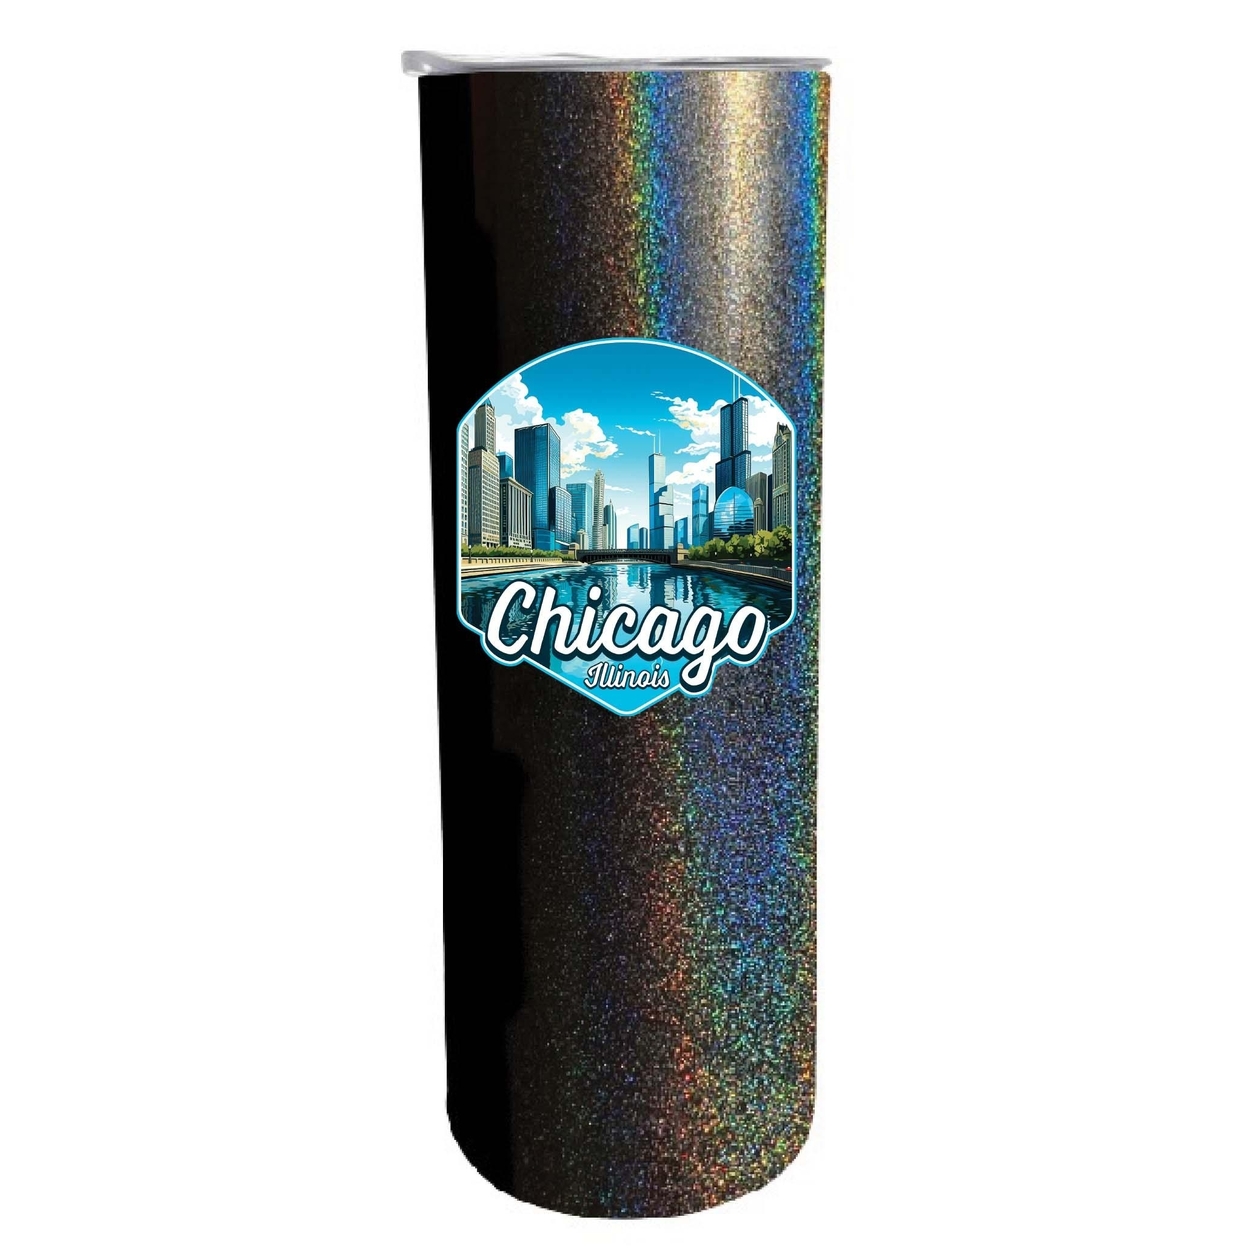 Chicago Illinois A Souvenir 20 Oz Insulated Skinny Tumbler - Black Glitter,,2-Pack